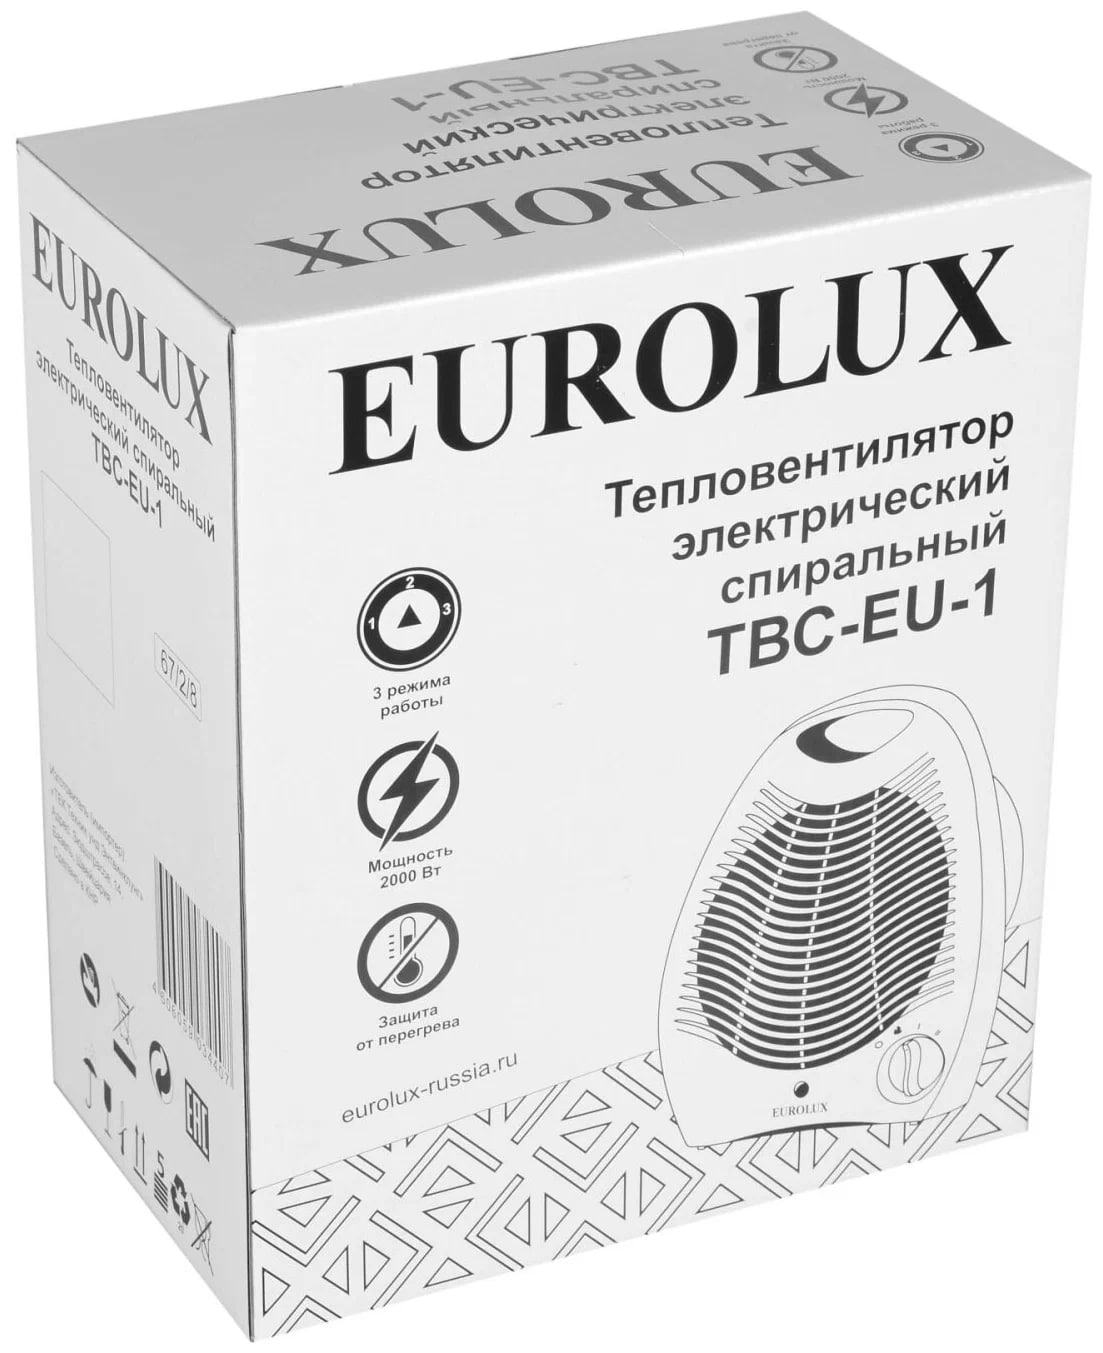 Коробка Eurolux ТВС-EU-1